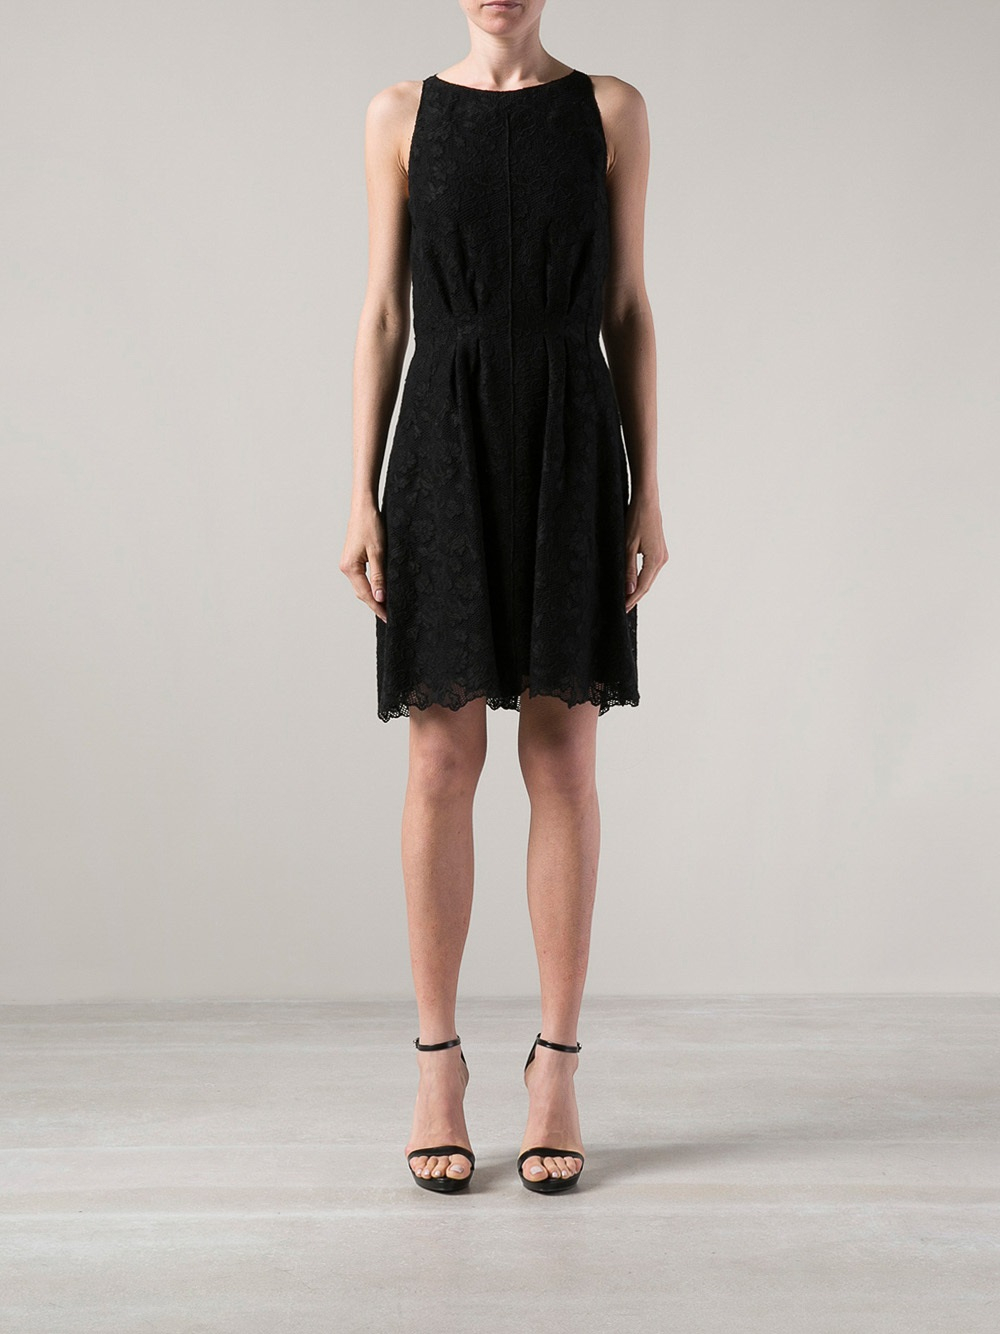 Lyst - Nina Ricci Sleeveless Lace Dress in Black